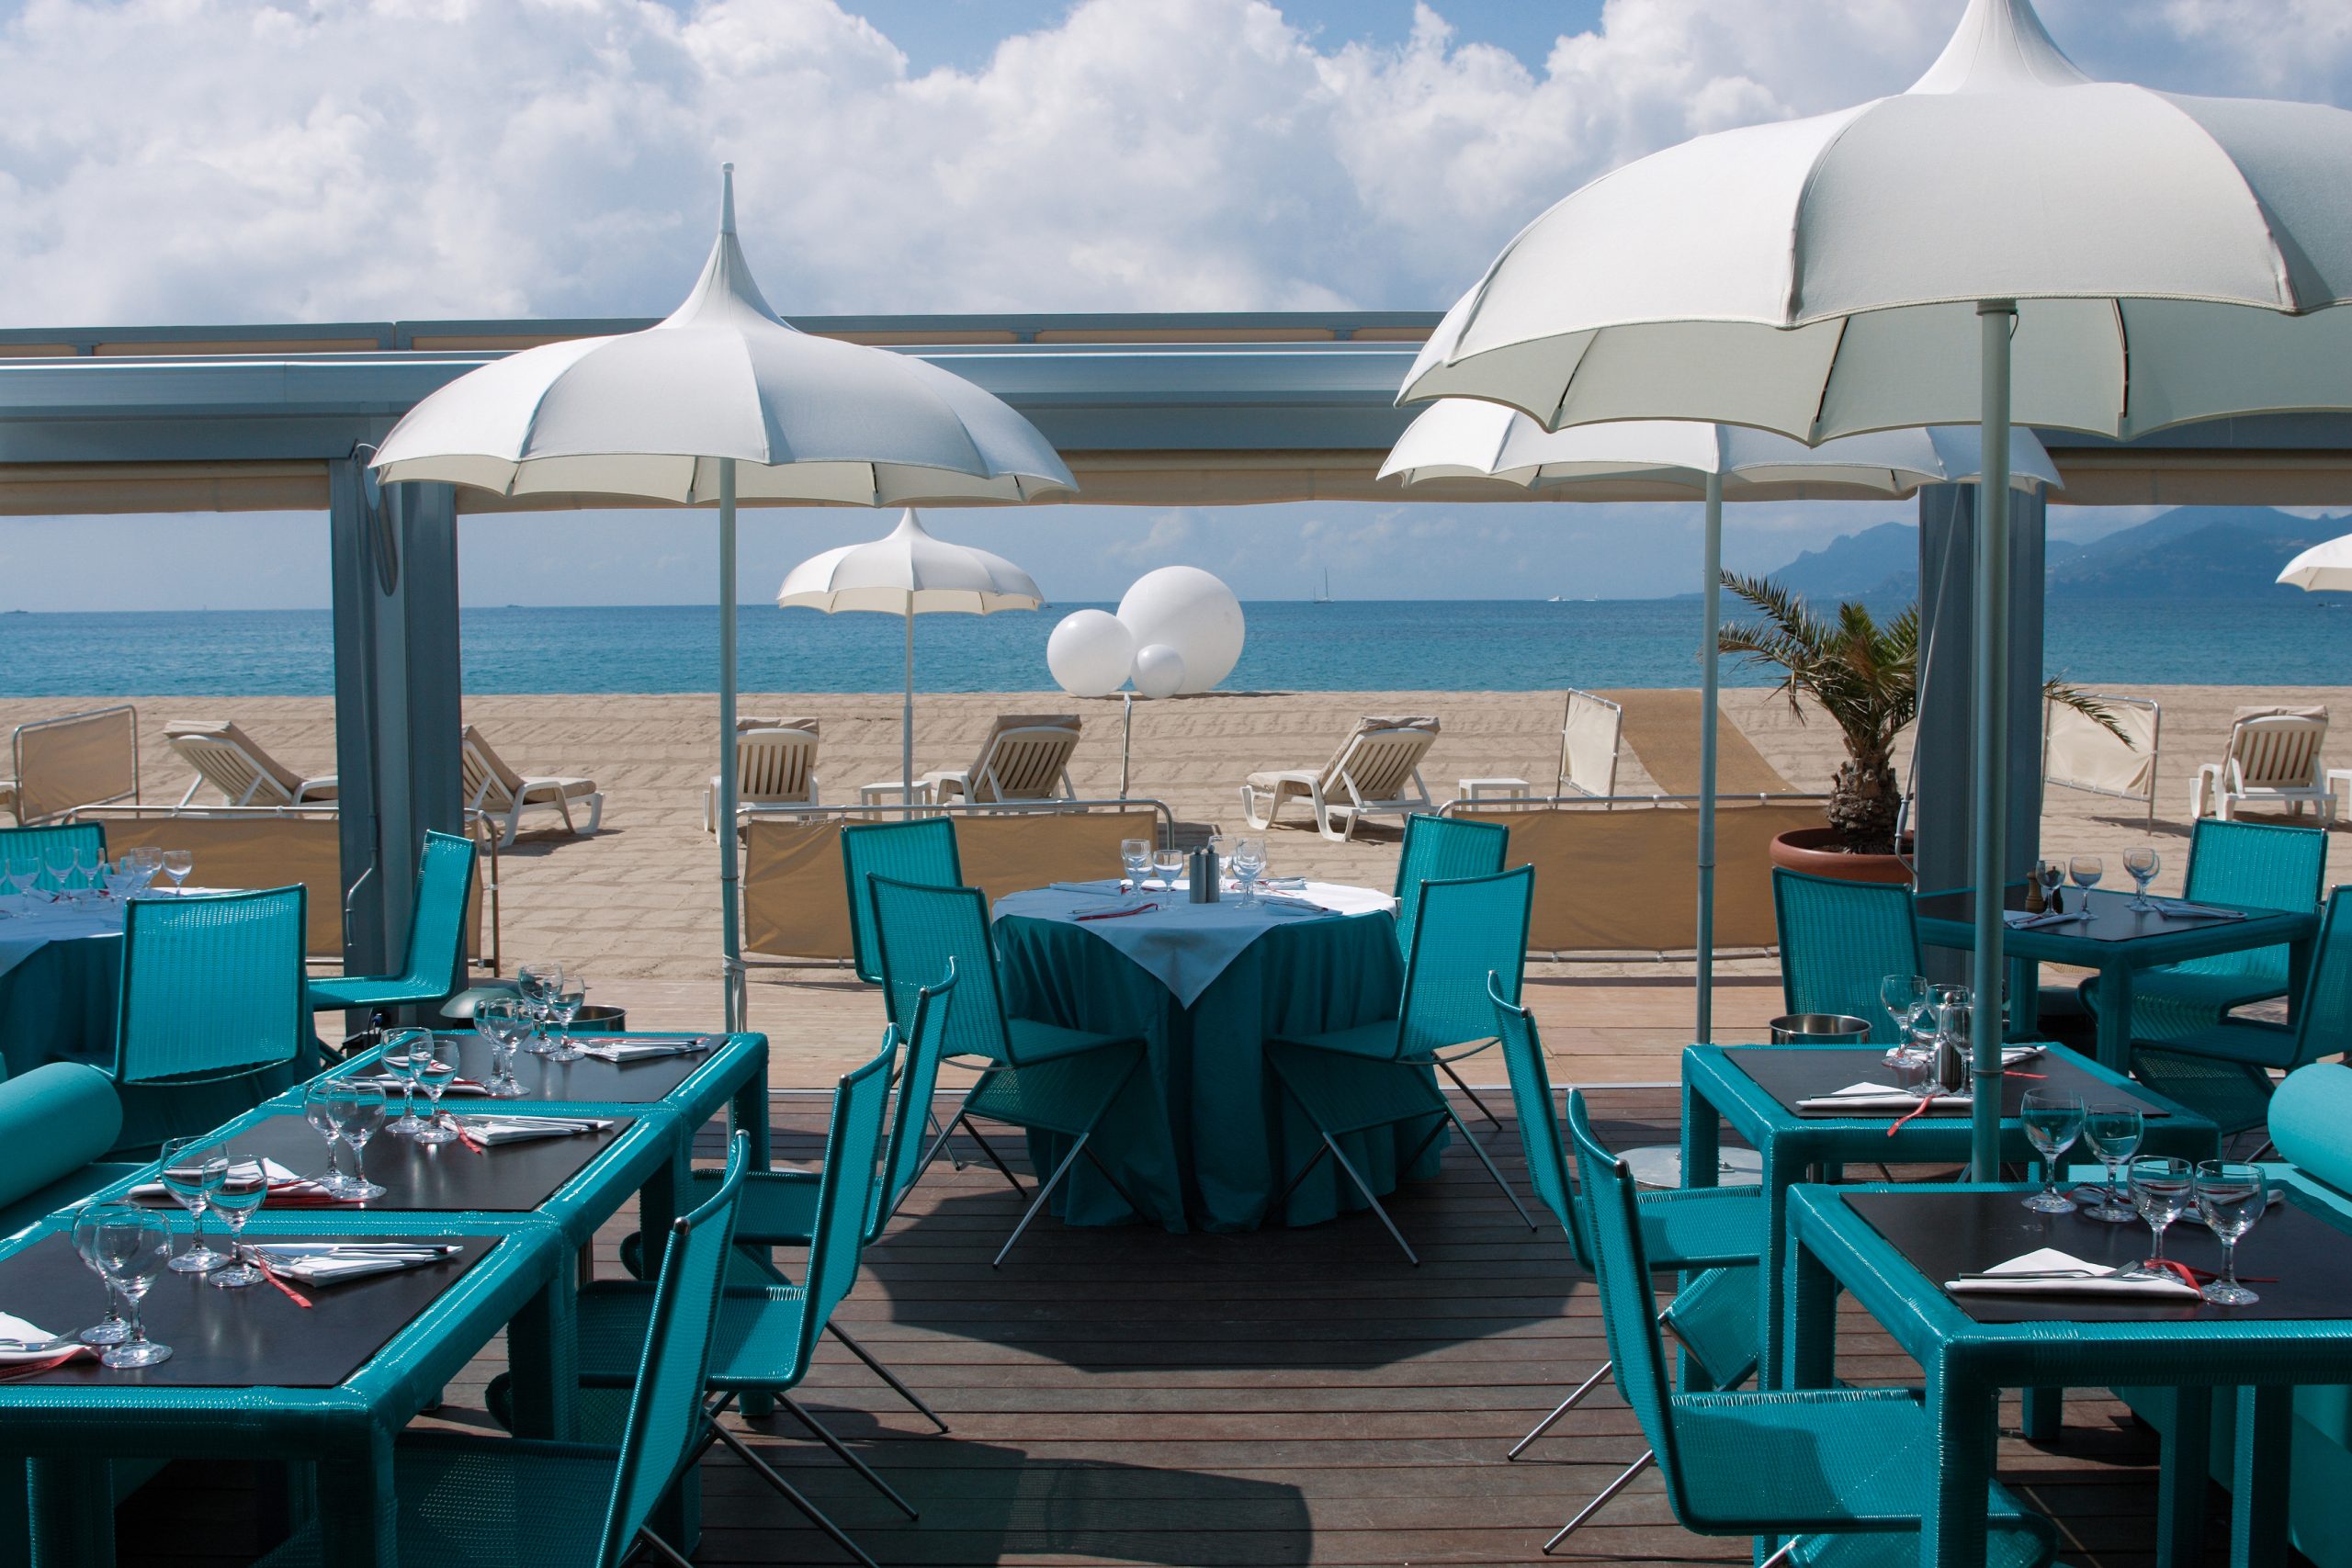 Hotel 3.14 restaurant on la plage - Gitaly contract